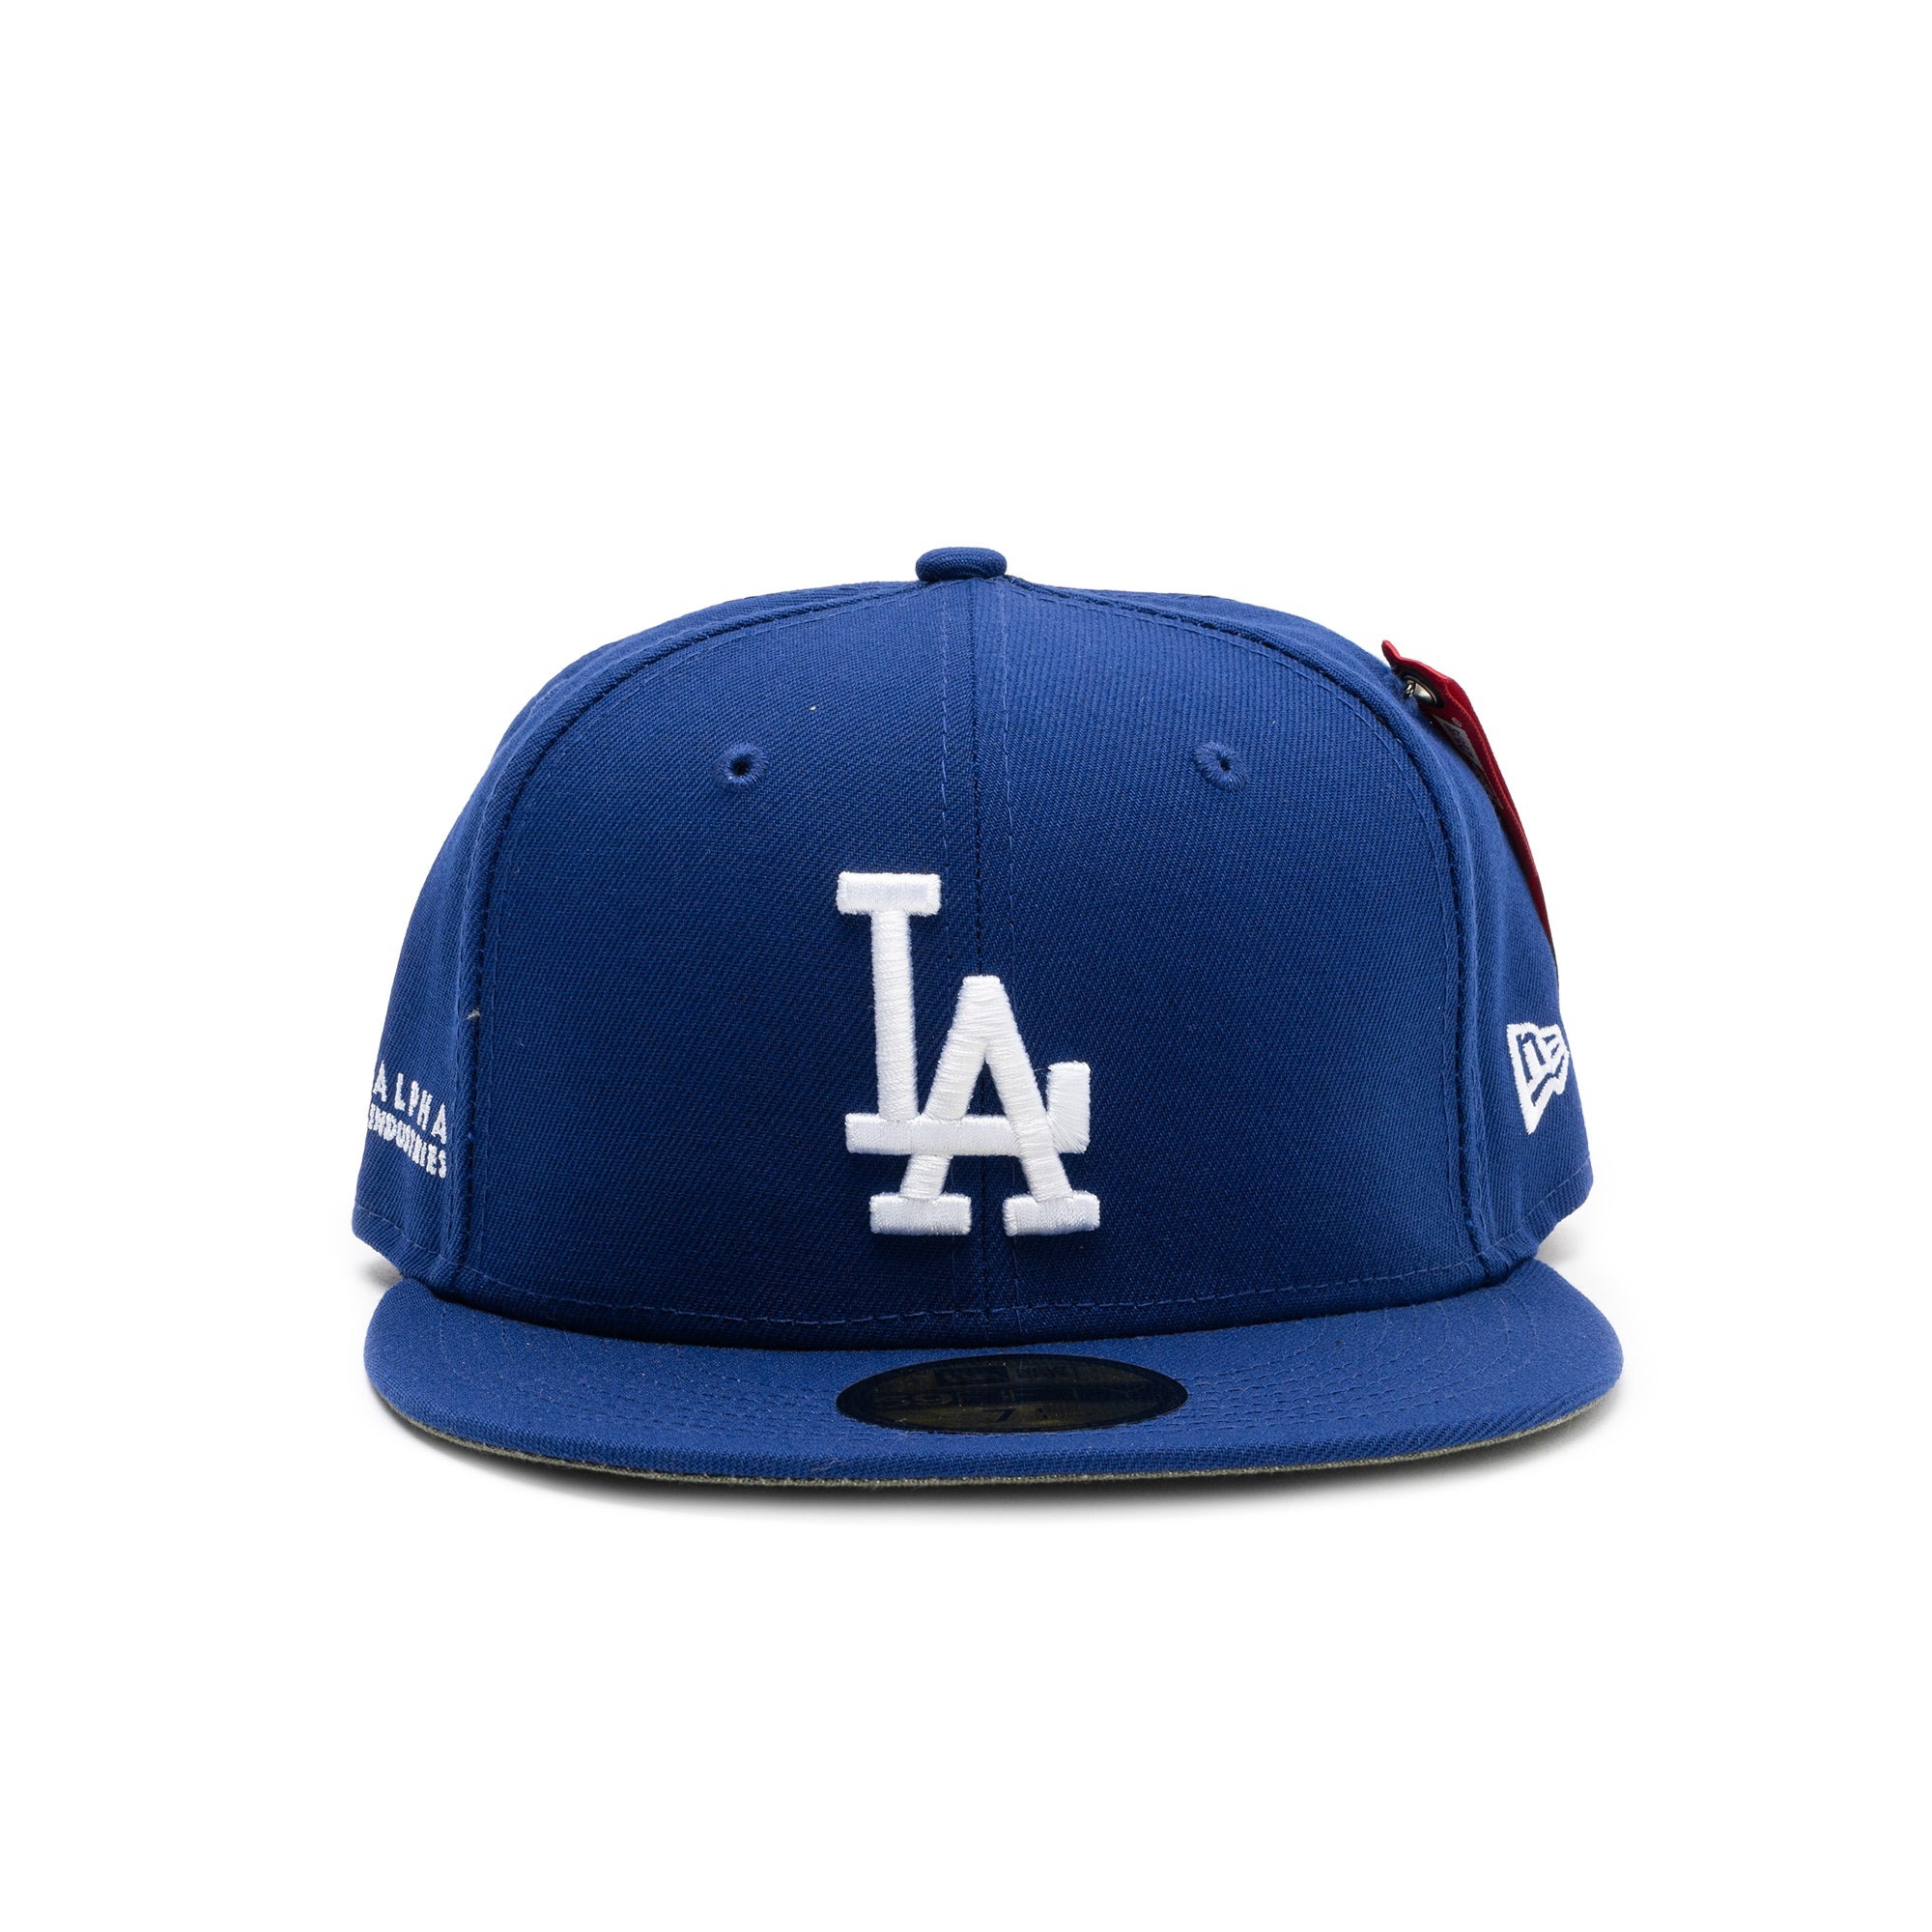 LA Dodgers Alpha Industries Blue